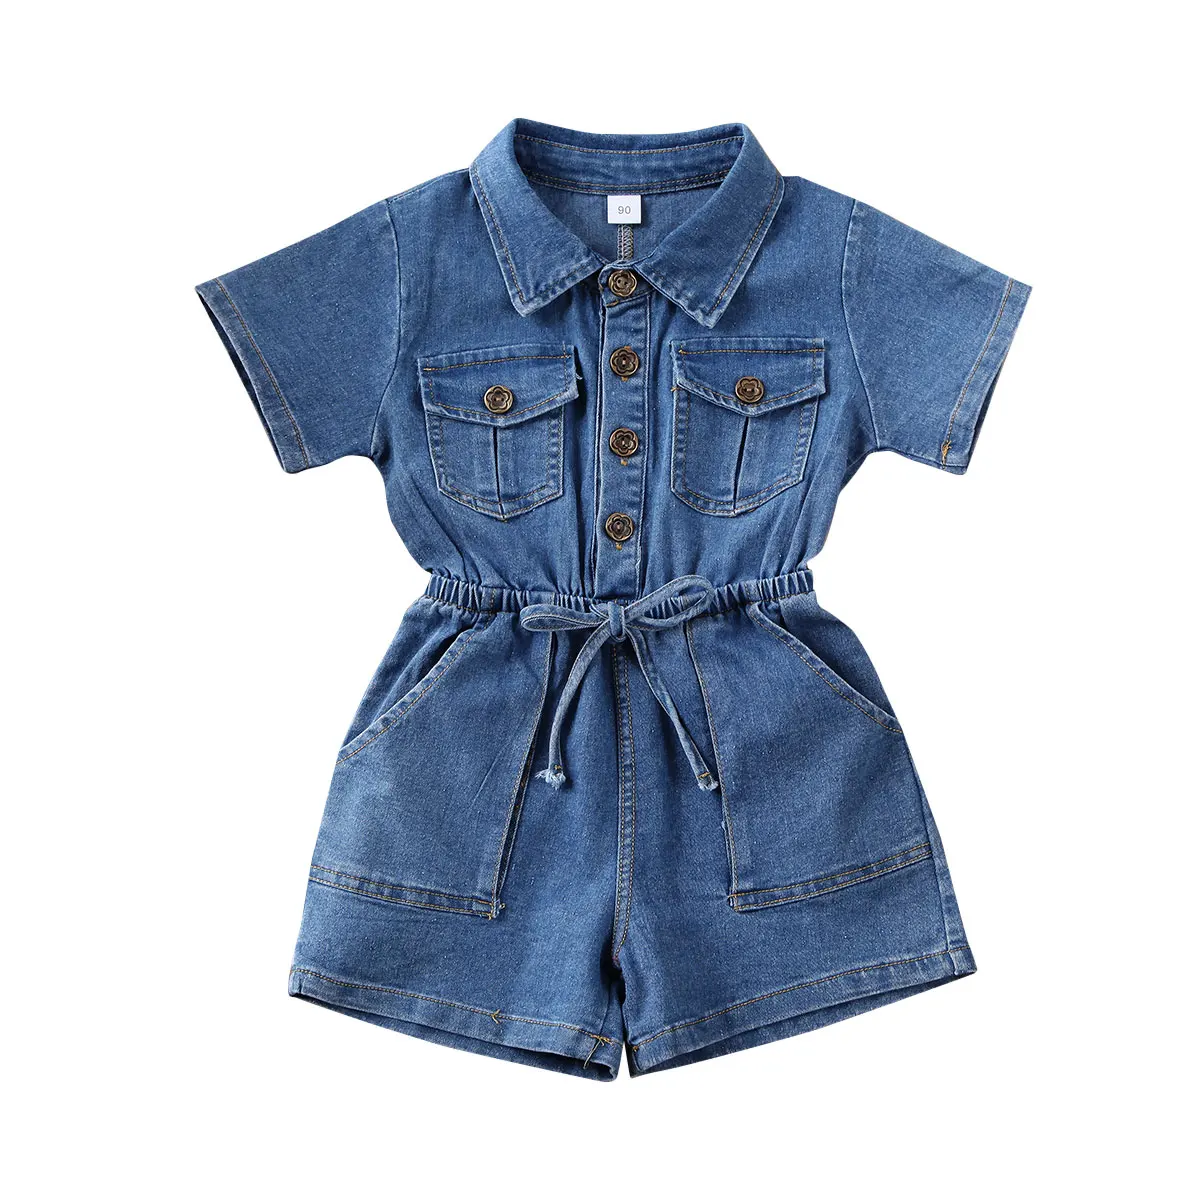 

Playsuit Baby Jumpsuit Denim Clothes Romper Clothes Kids Girl Overalls Kids Sunsuit Outfits Infant Girl Wholesale